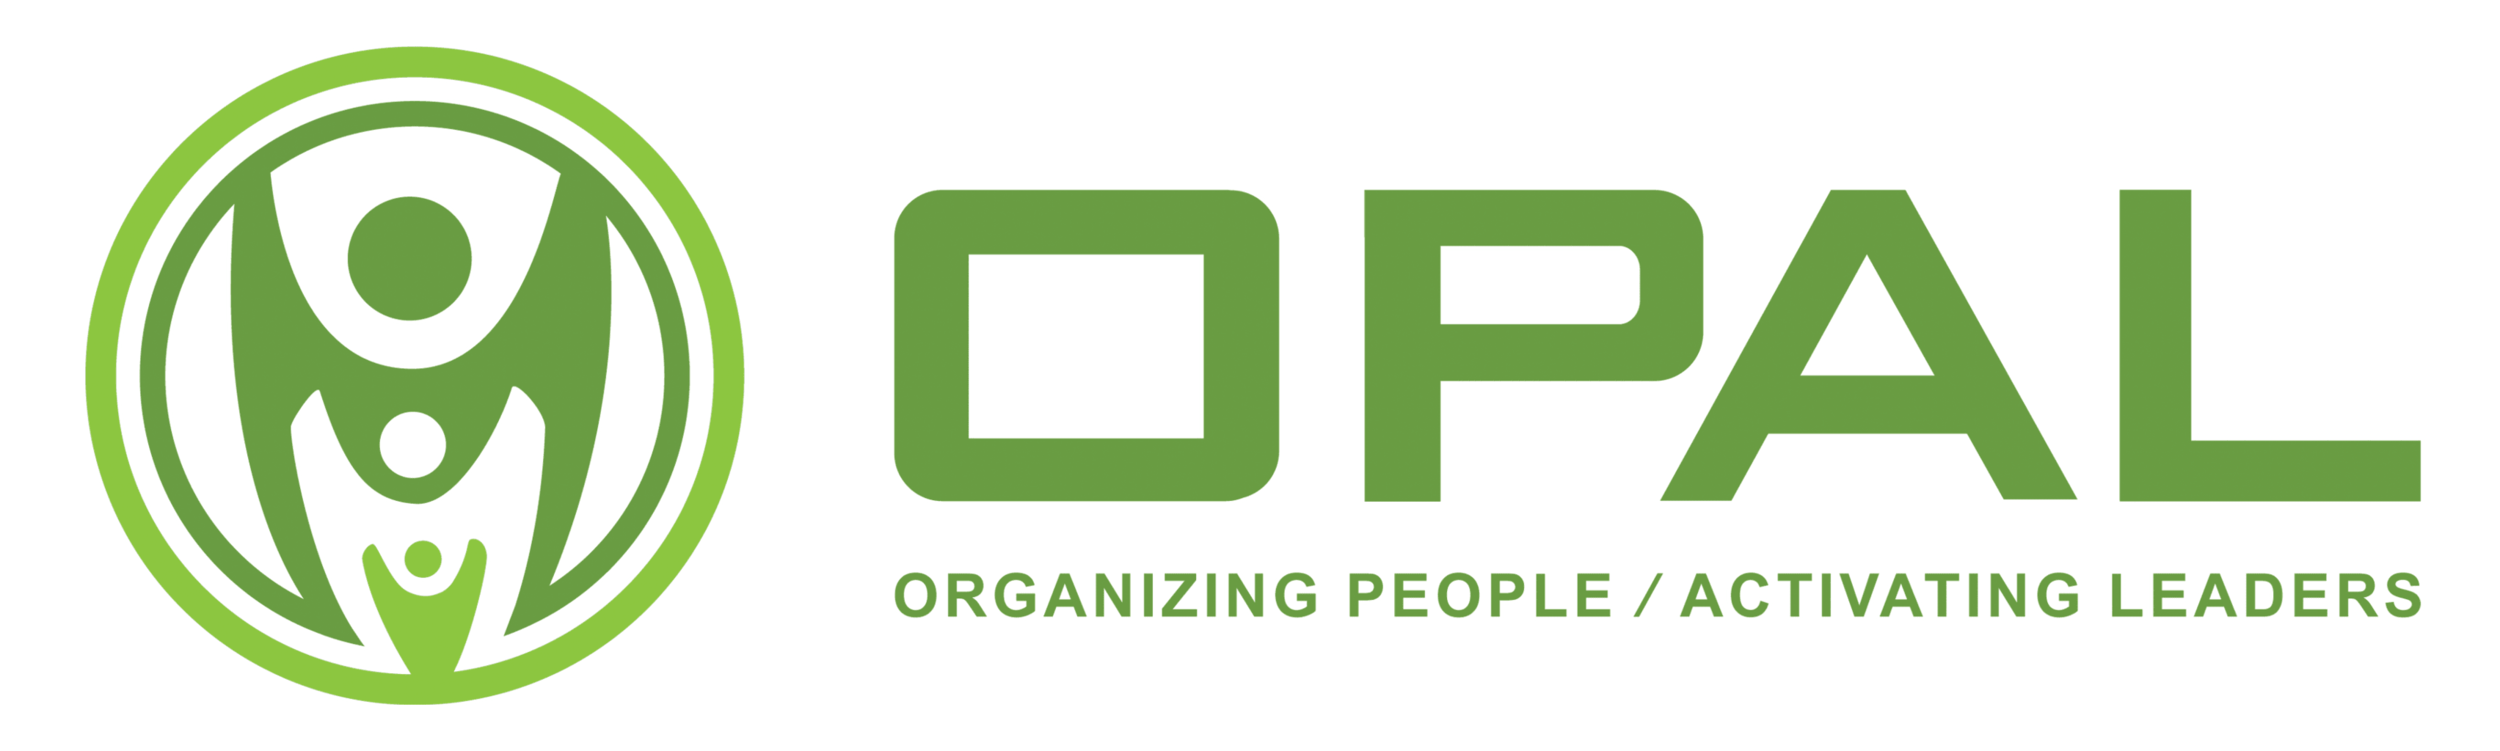 OPAL Logo.png